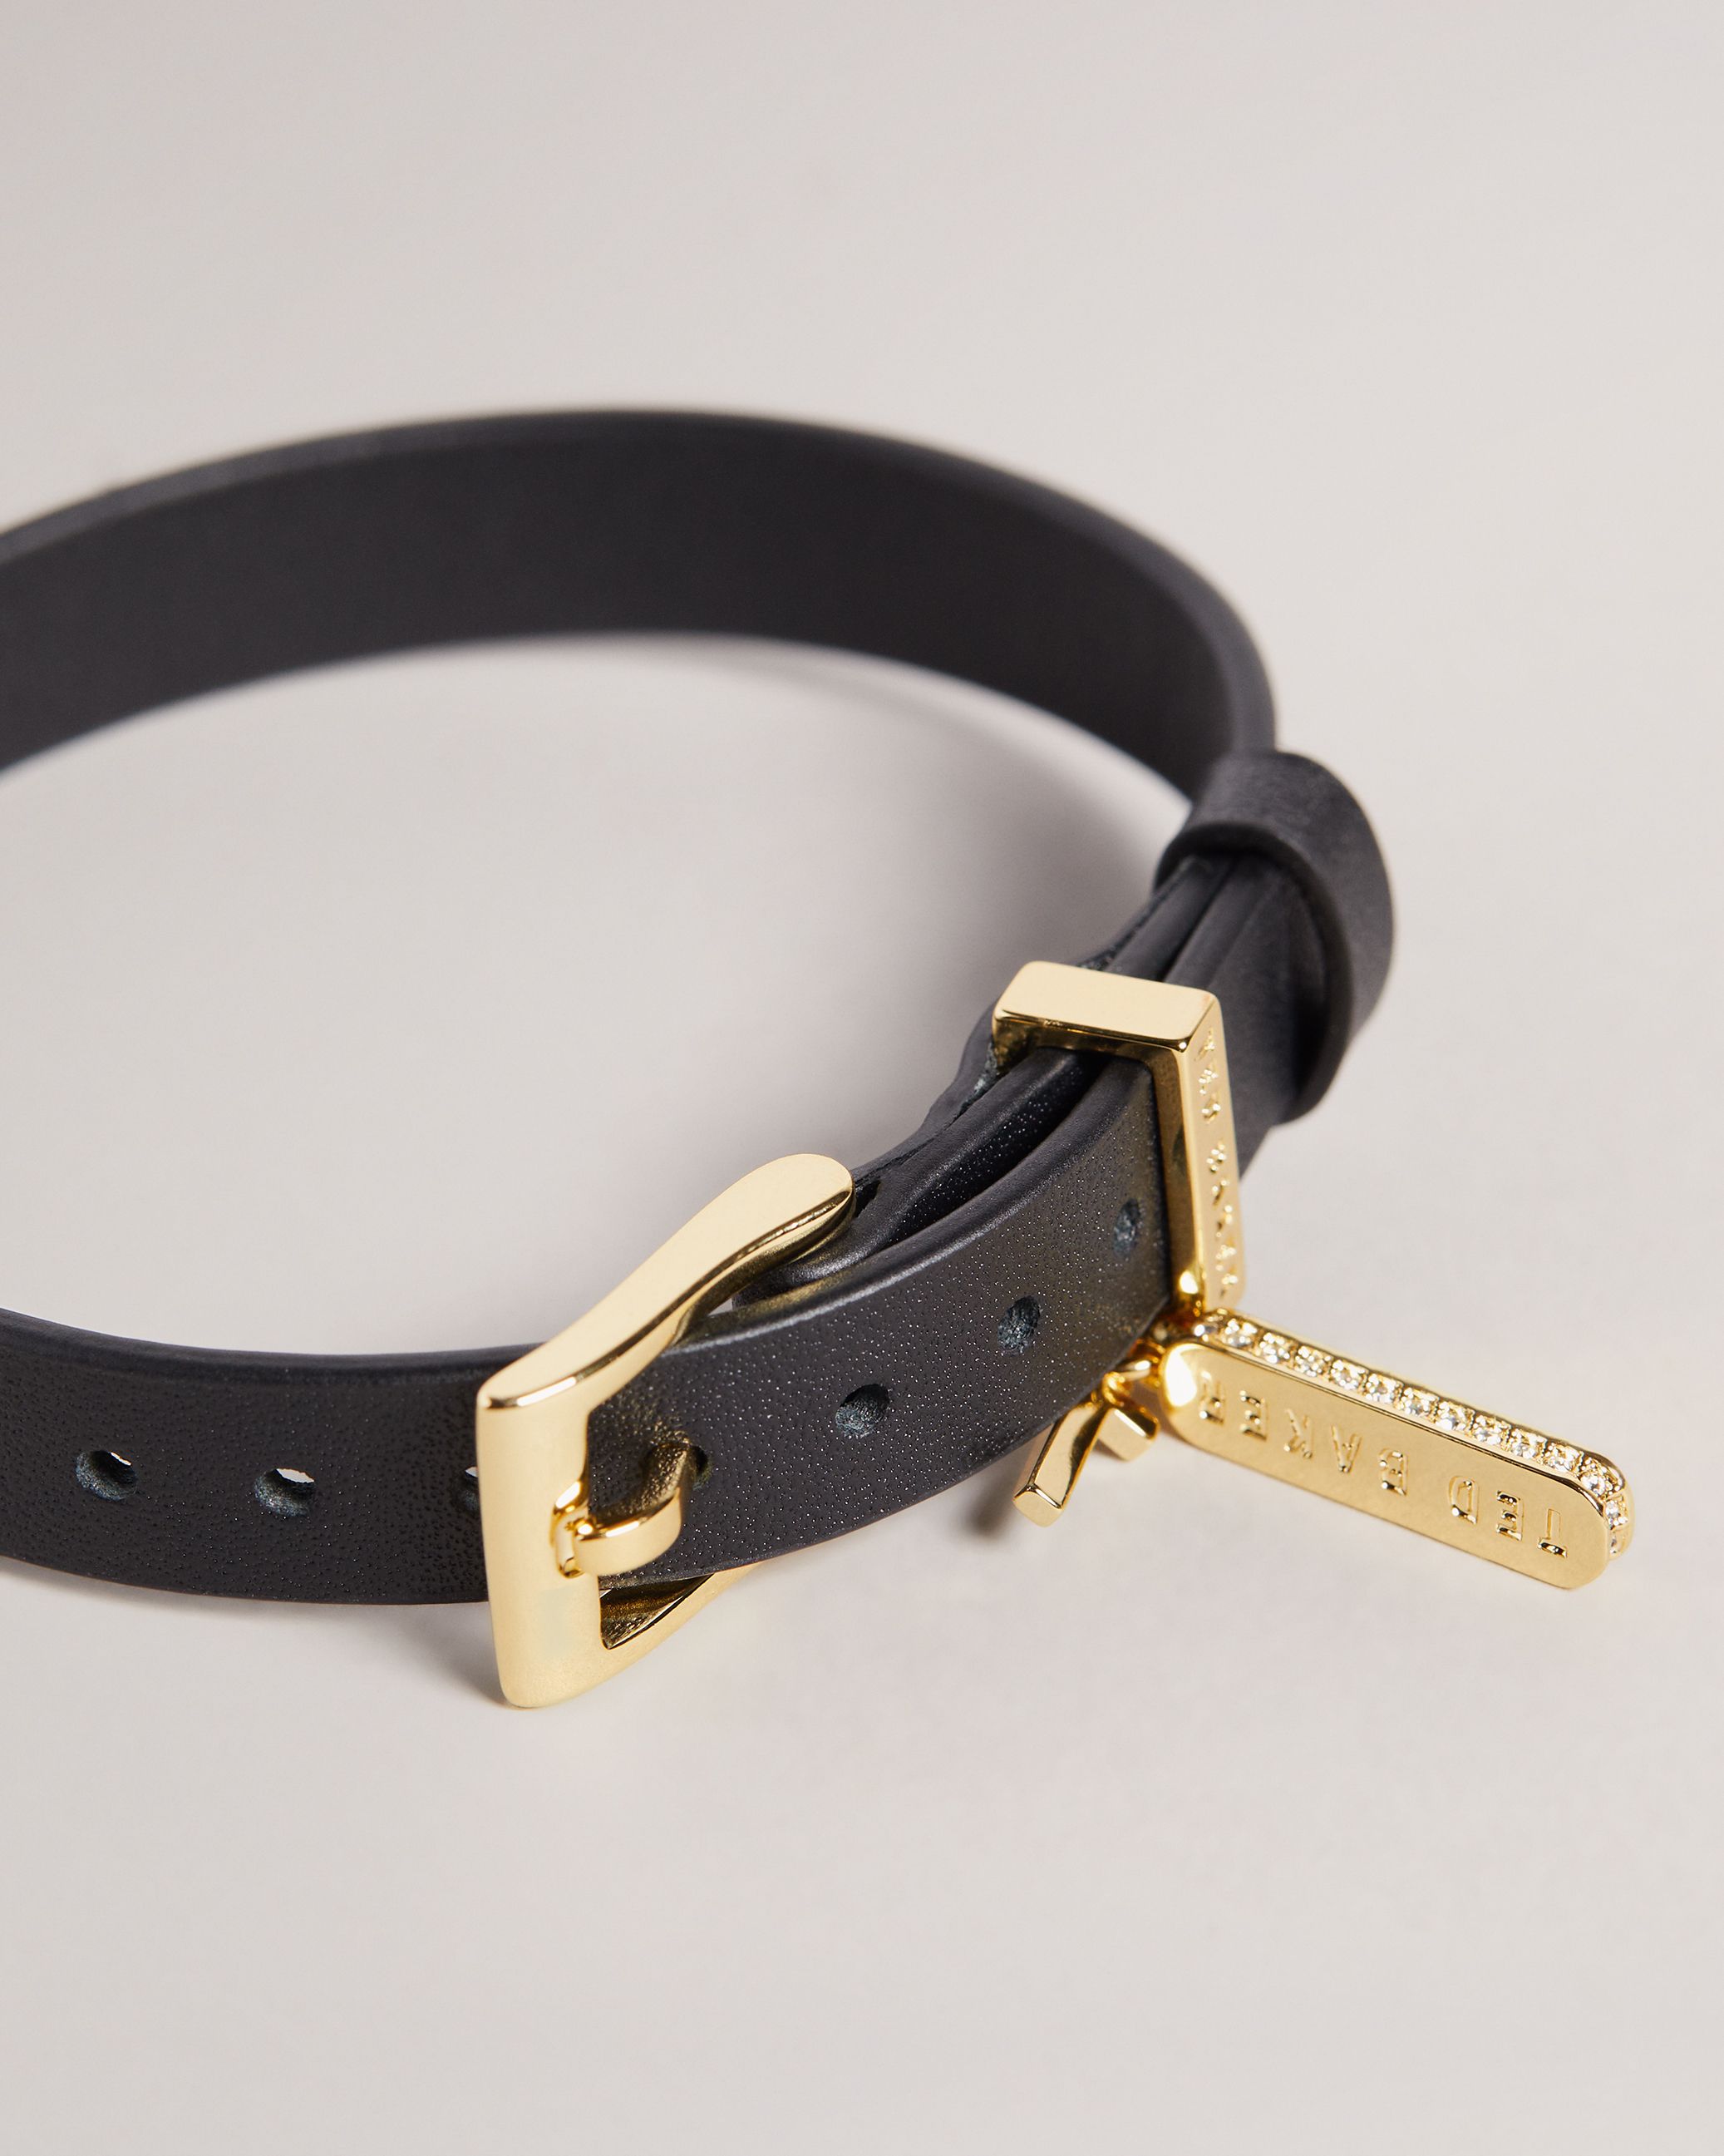 Tbj2991 Leather Bracelet